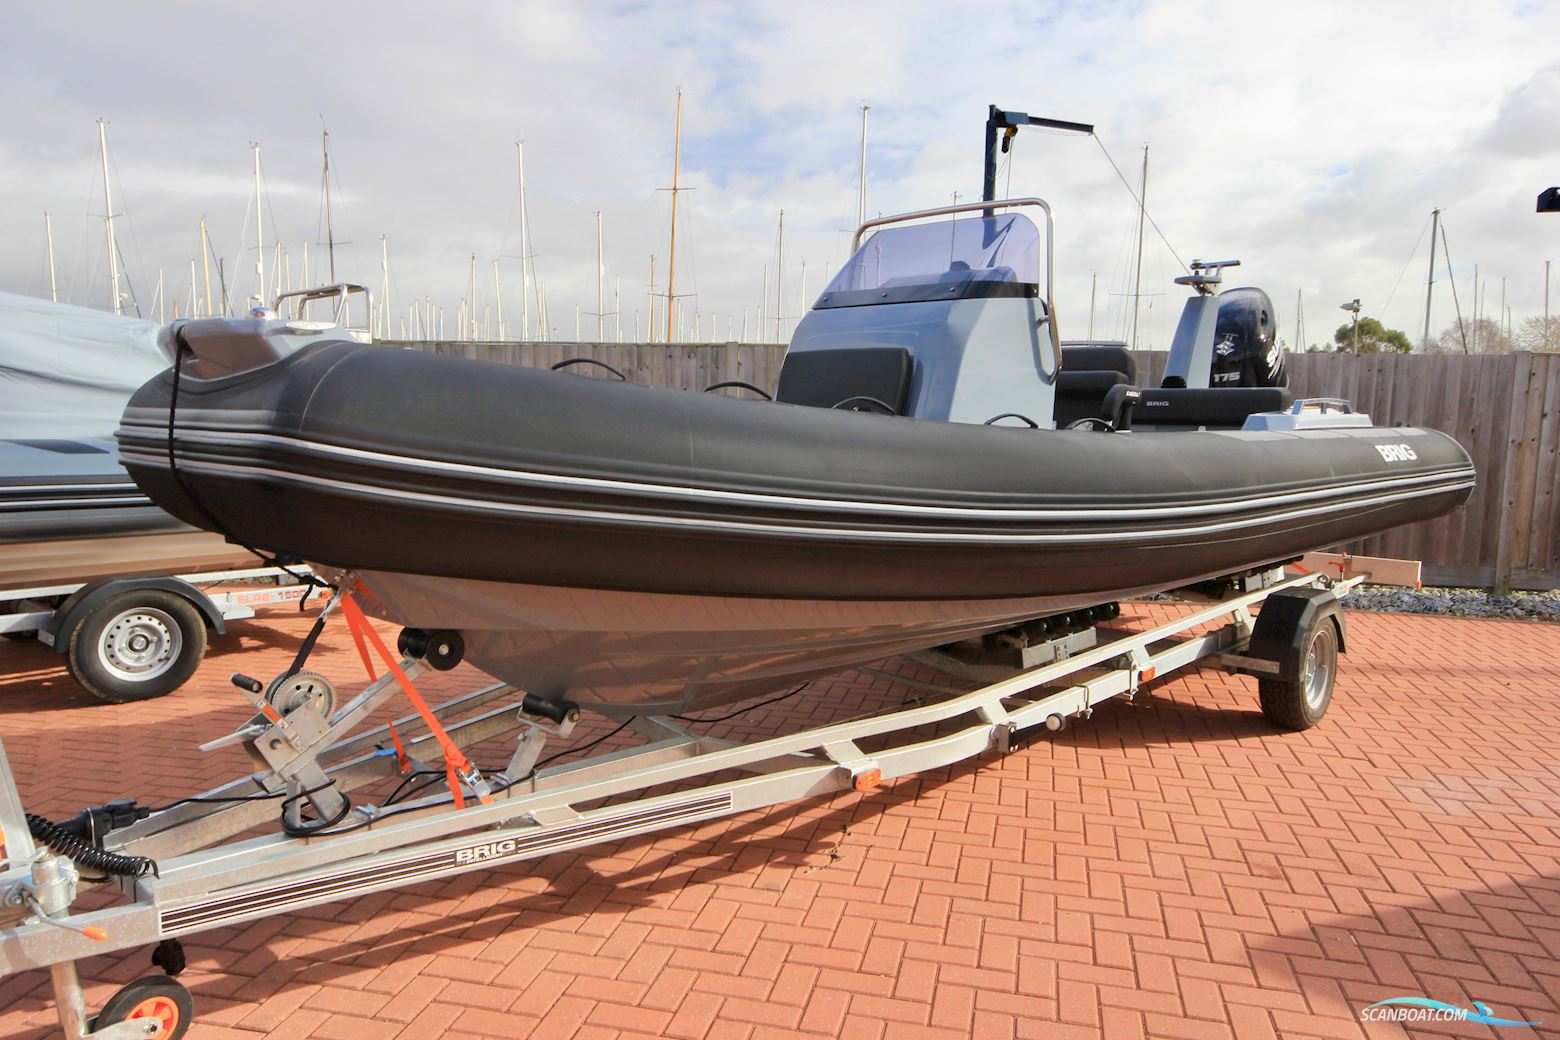 Brig Ribs Eagle 6.7 Schlauchboot / Rib 2024, mit Suzuki motor, England